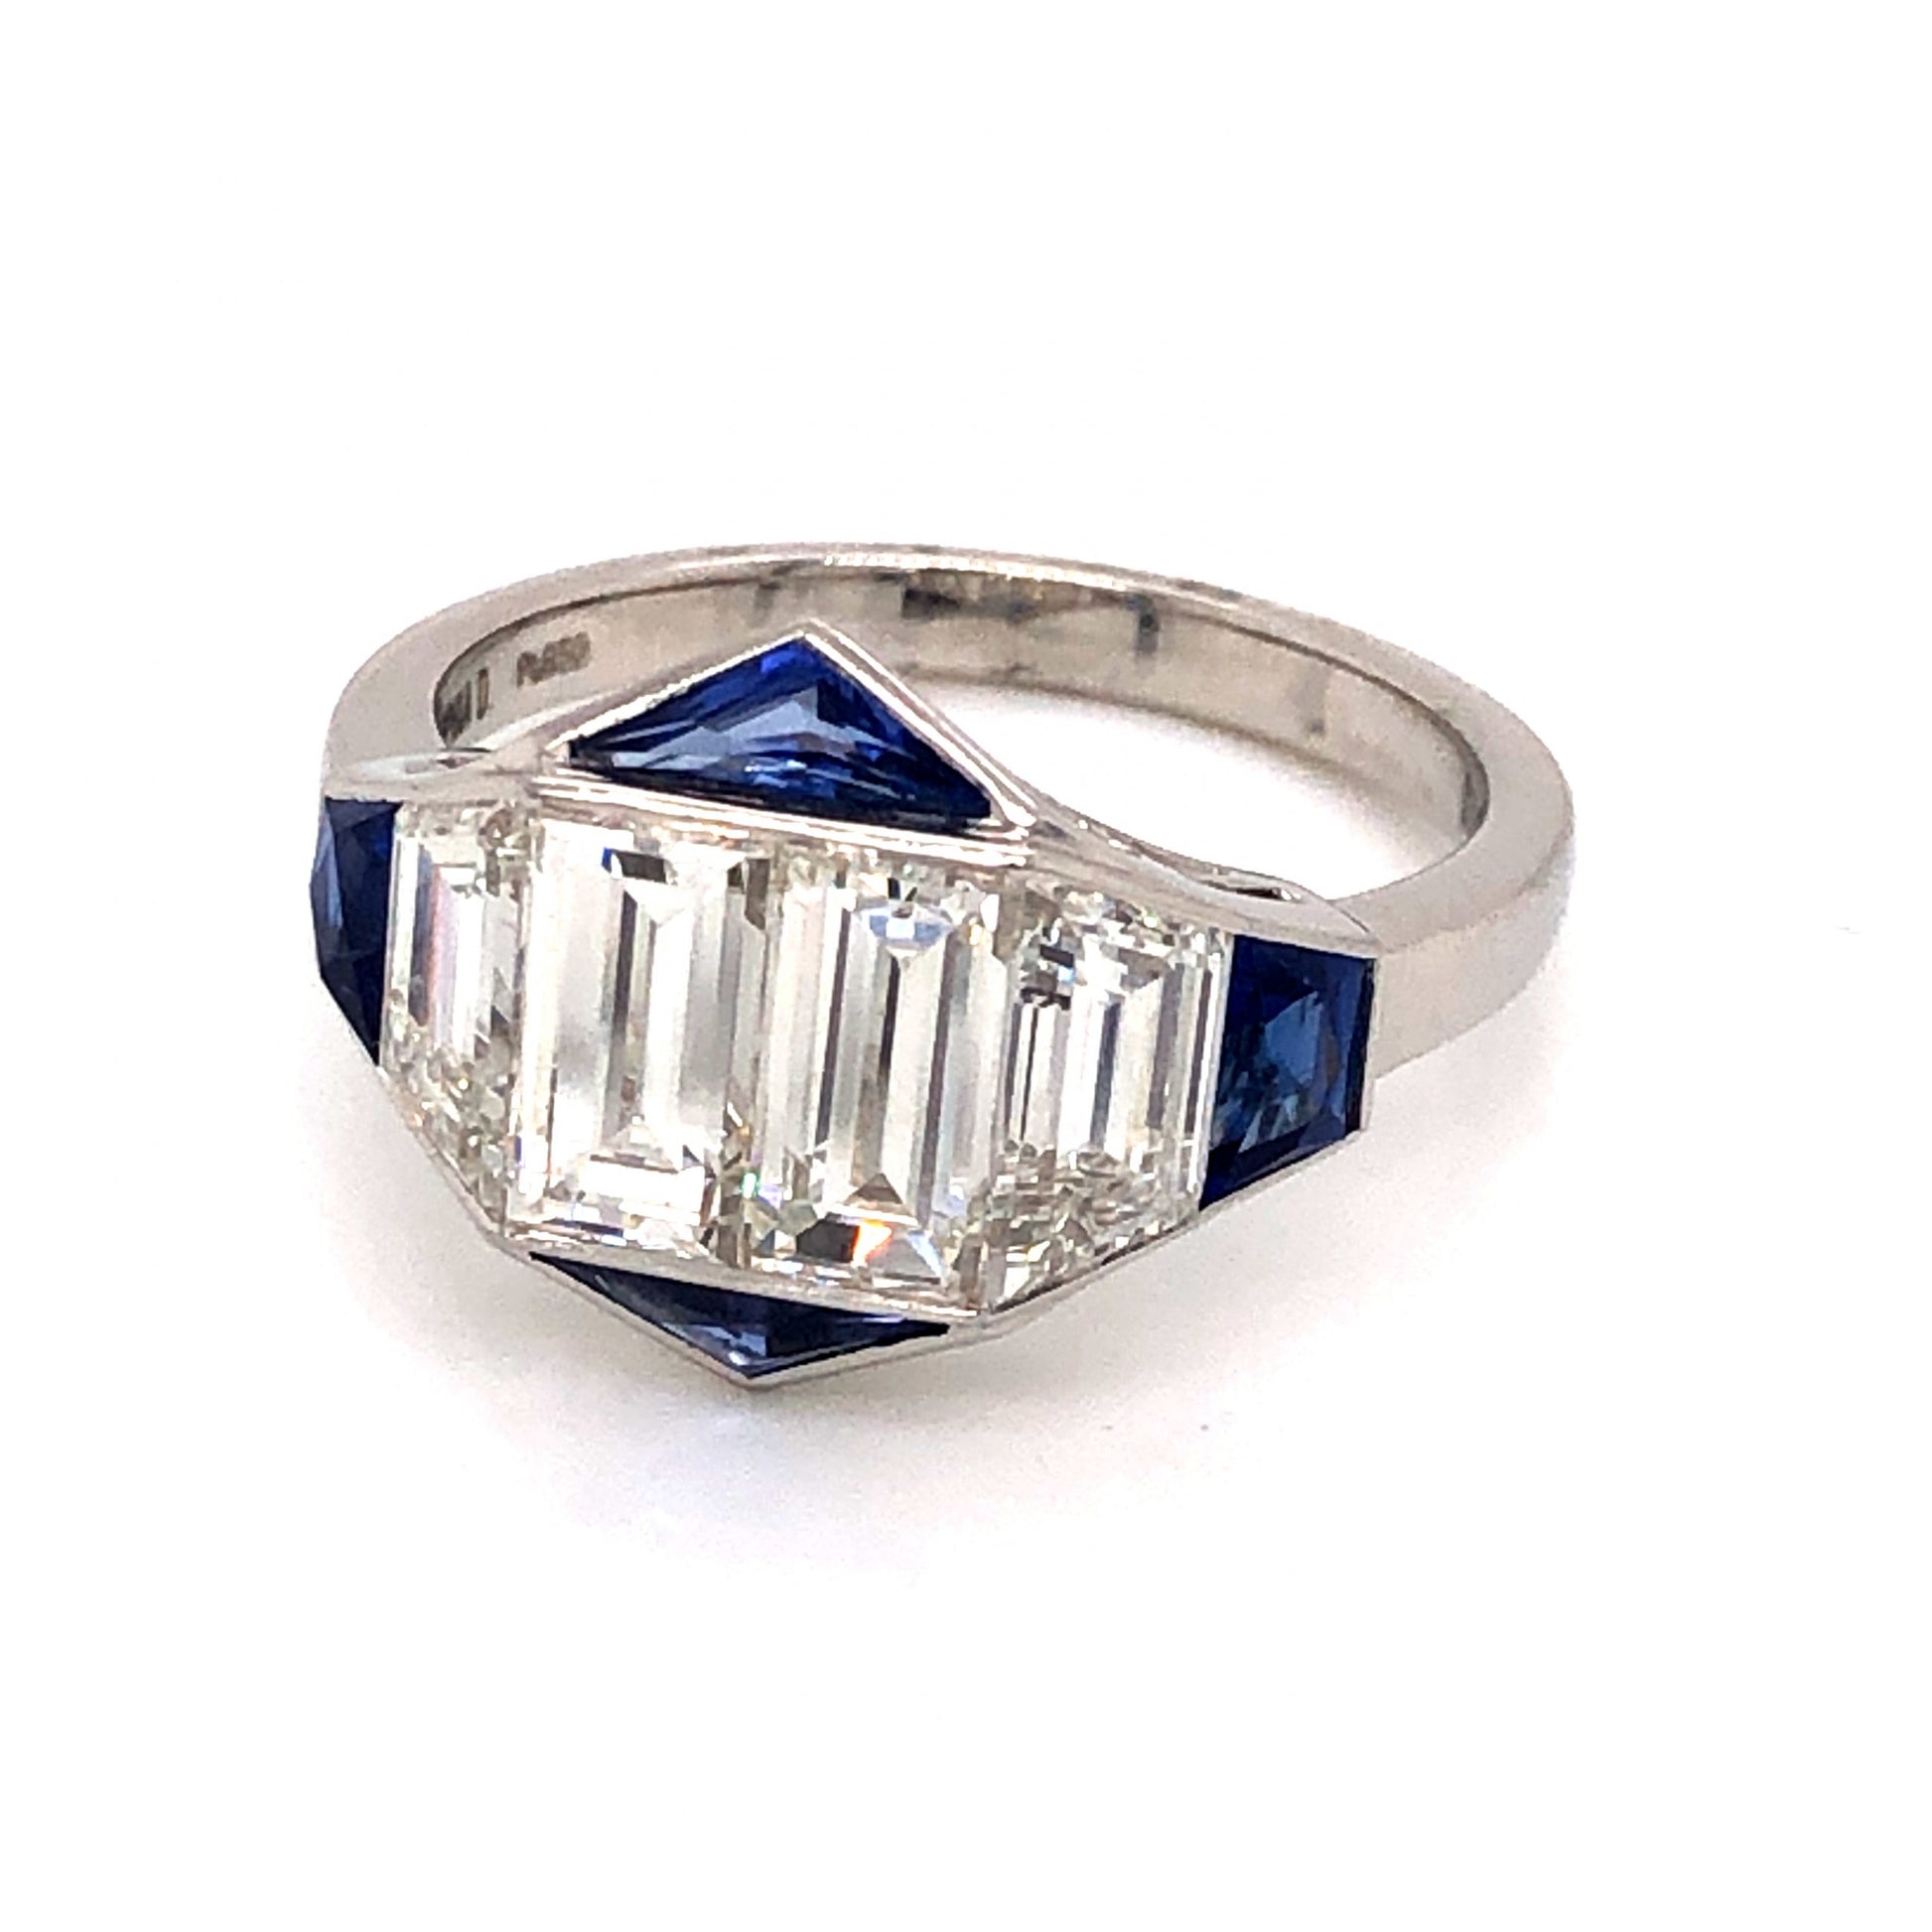 2.42 Diamond & Sapphire Cocktail Ring in Platinum